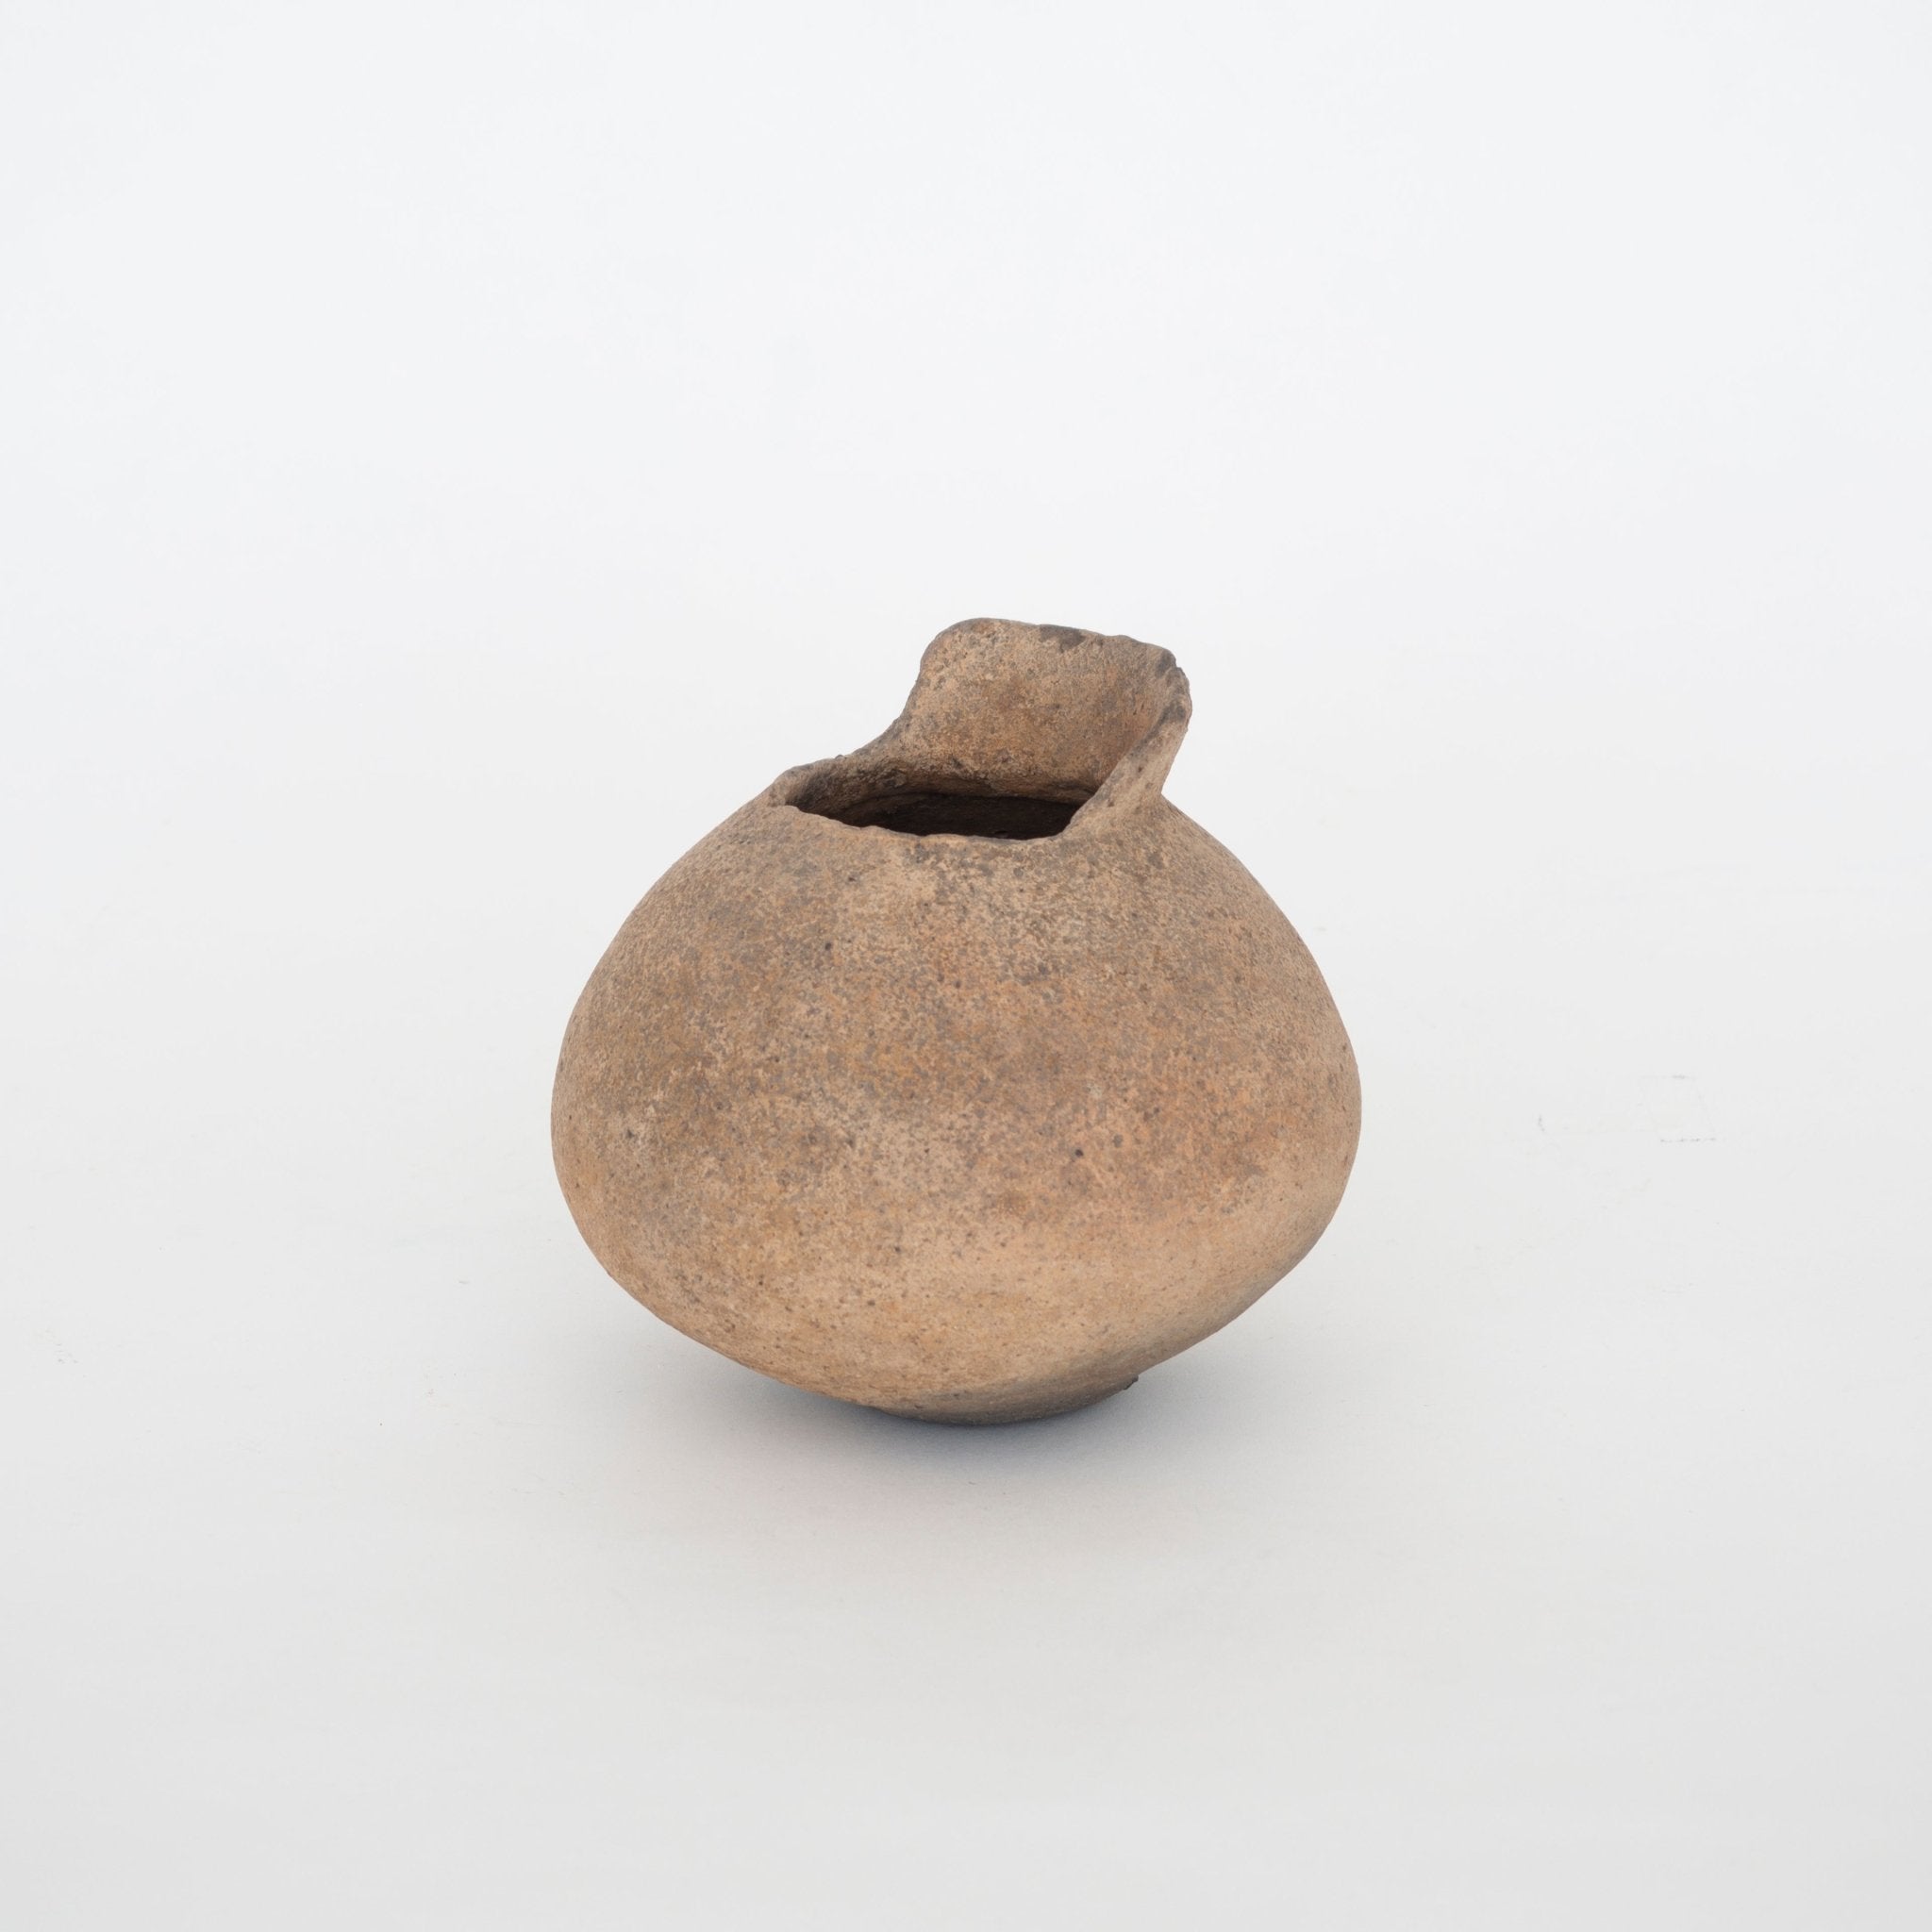 082 Unknown, Japan Ceramic Object | Tortoise General Store